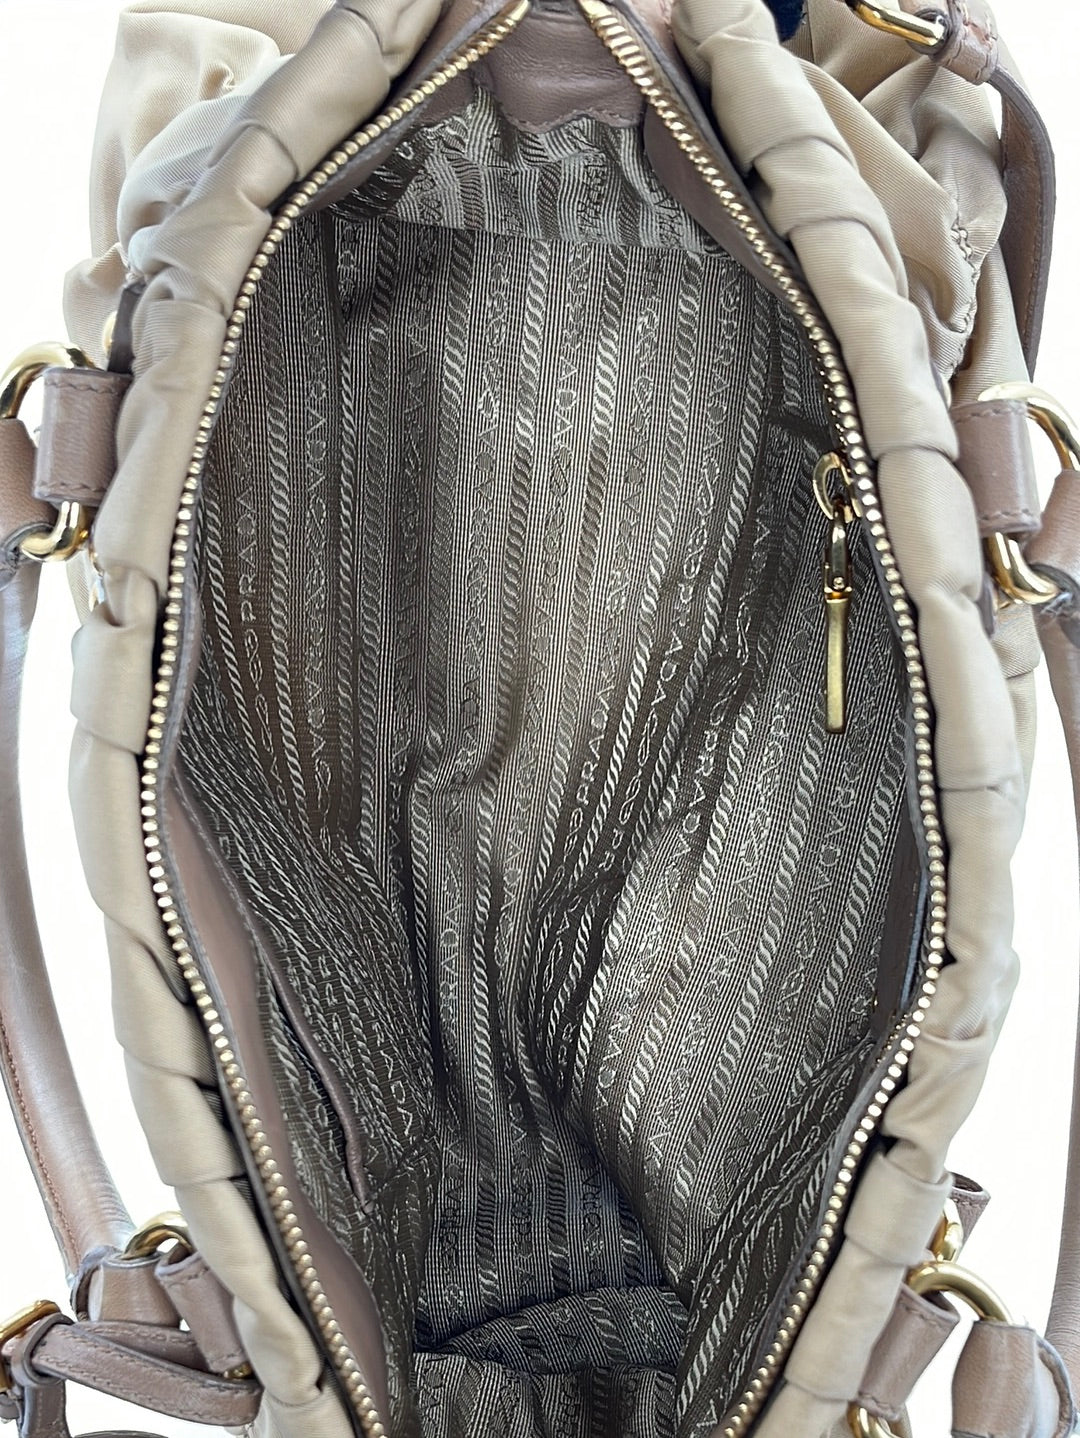 Authentic PRADA 2Way Shoulder Bag Hand Bag Black Nylon #f23719